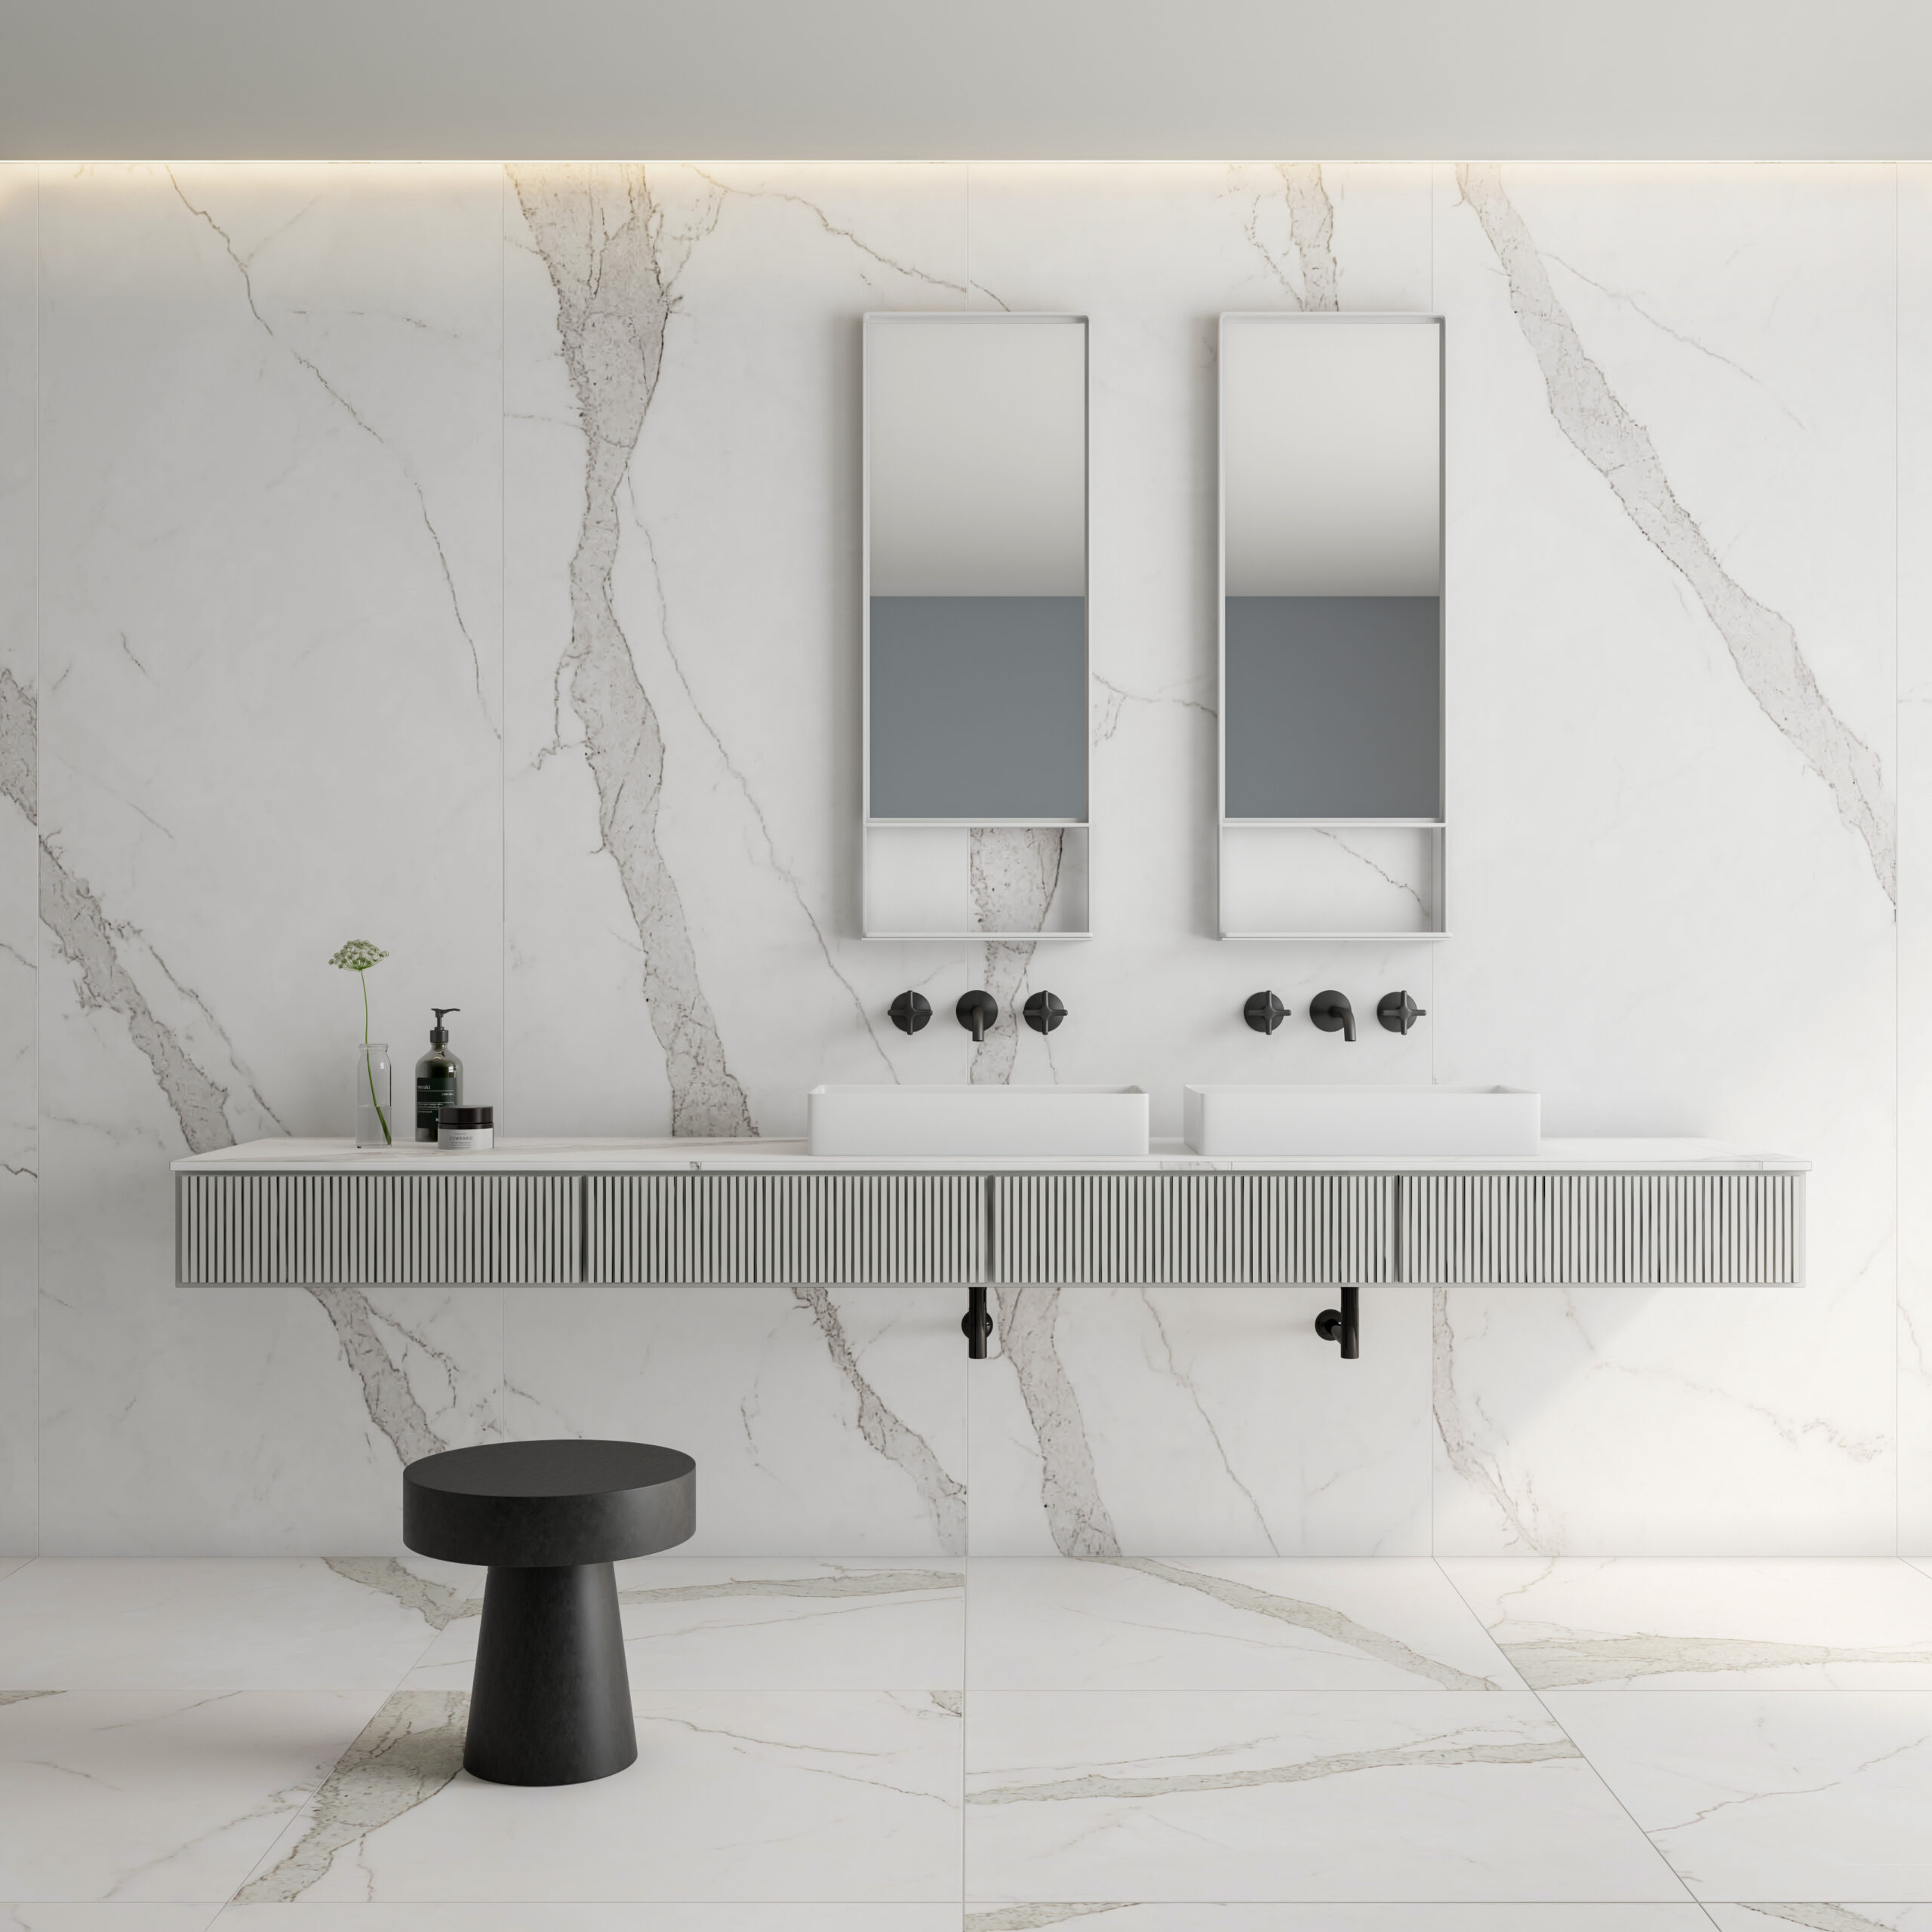 A borda retificada é uma característica interessante para revestimentos de banheiros minimalistas (Projeto: Portobello S.A.)